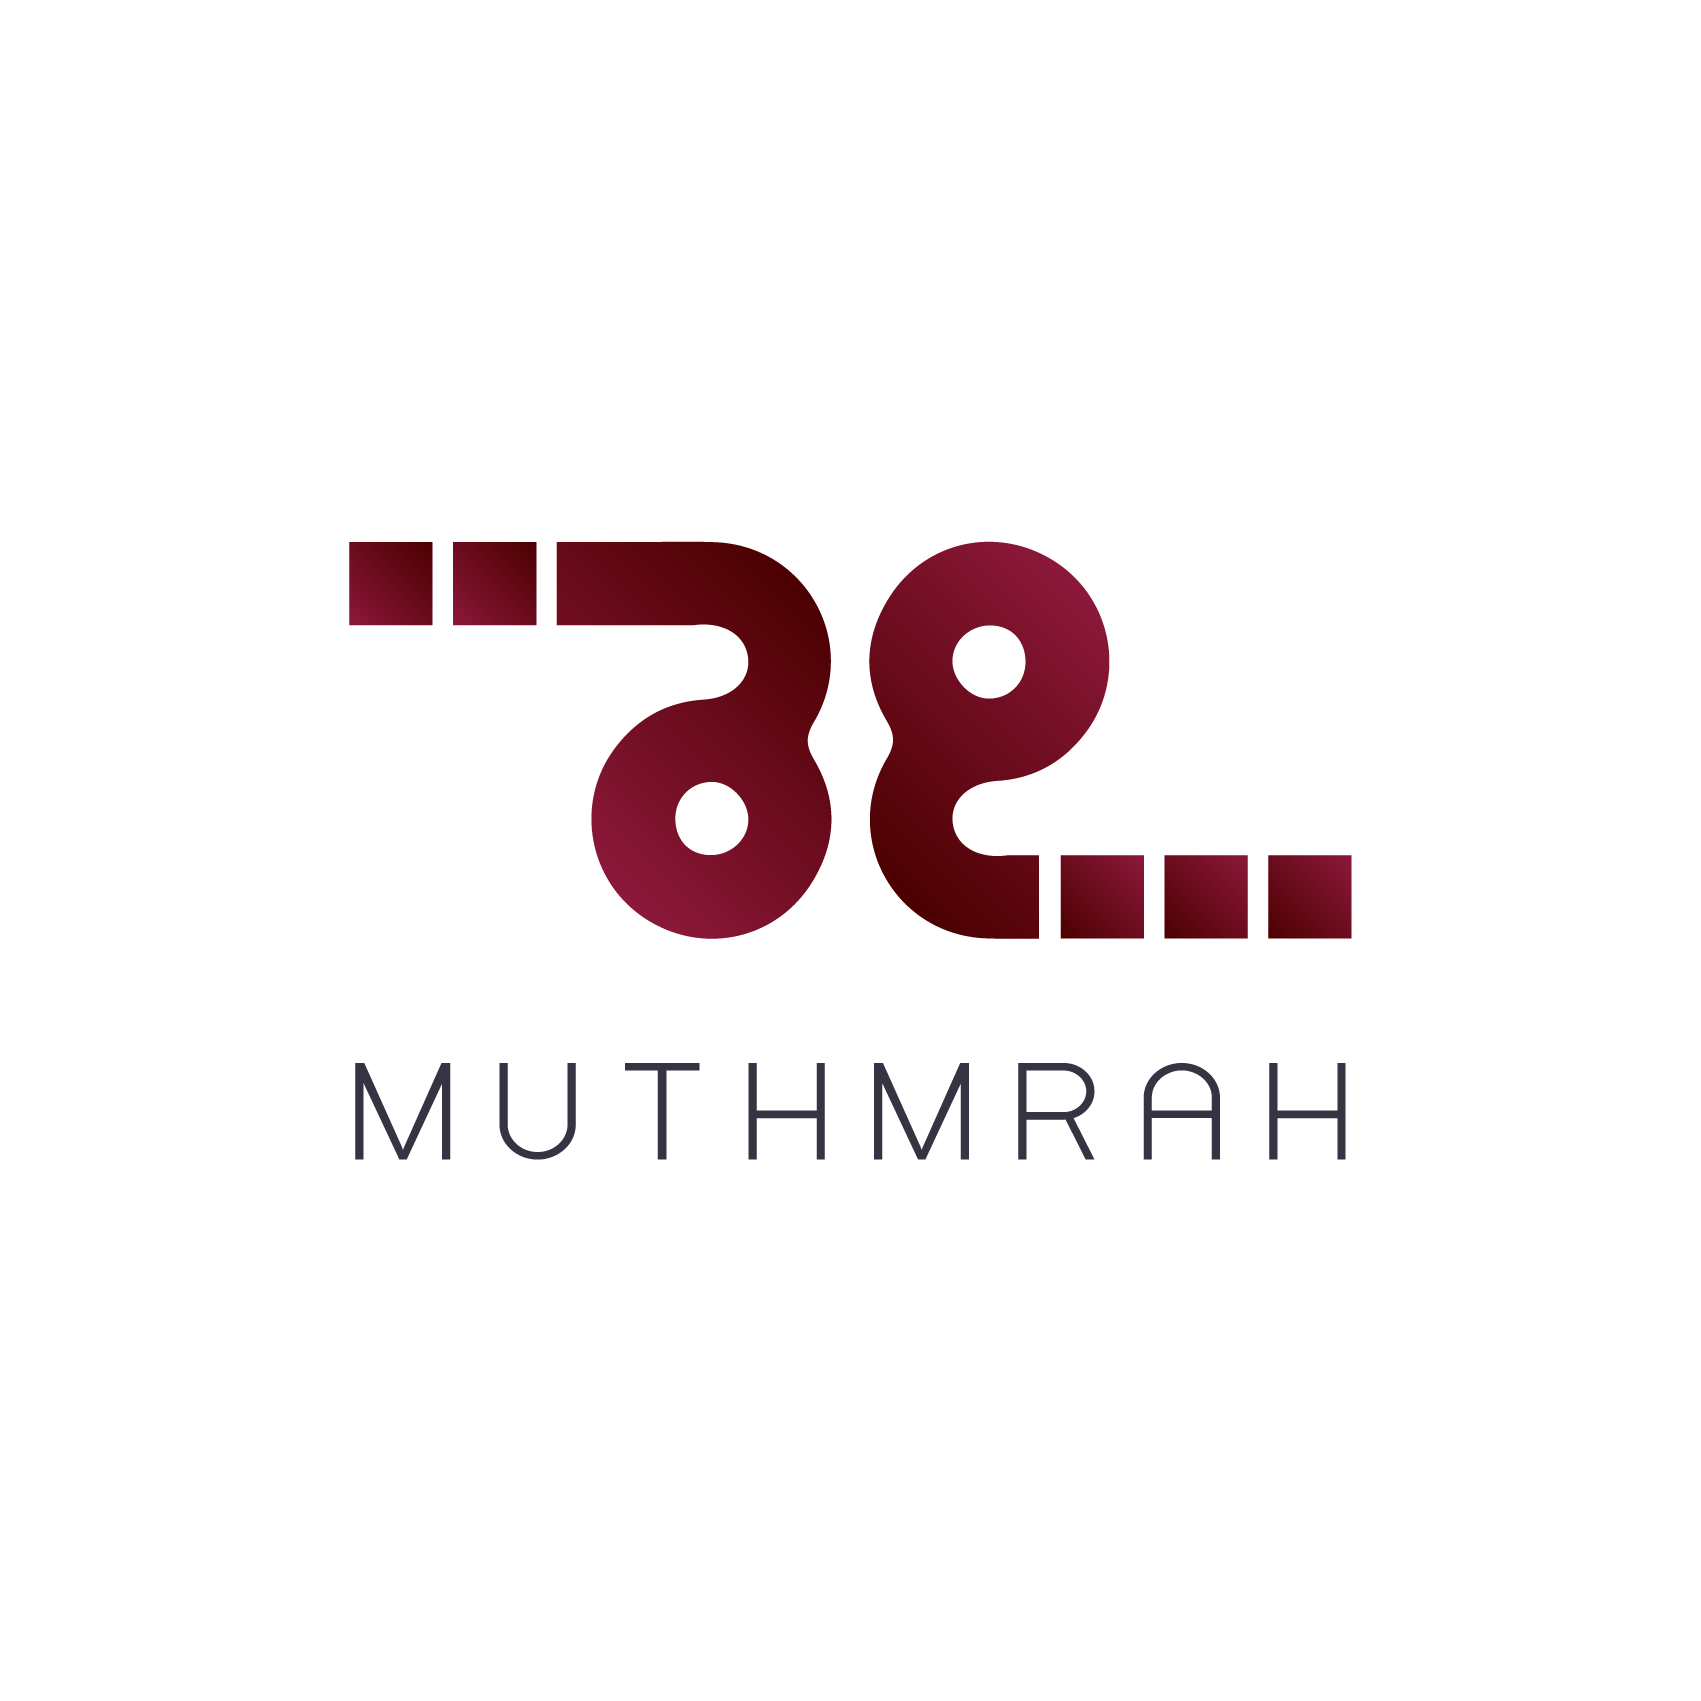 Muthmrah